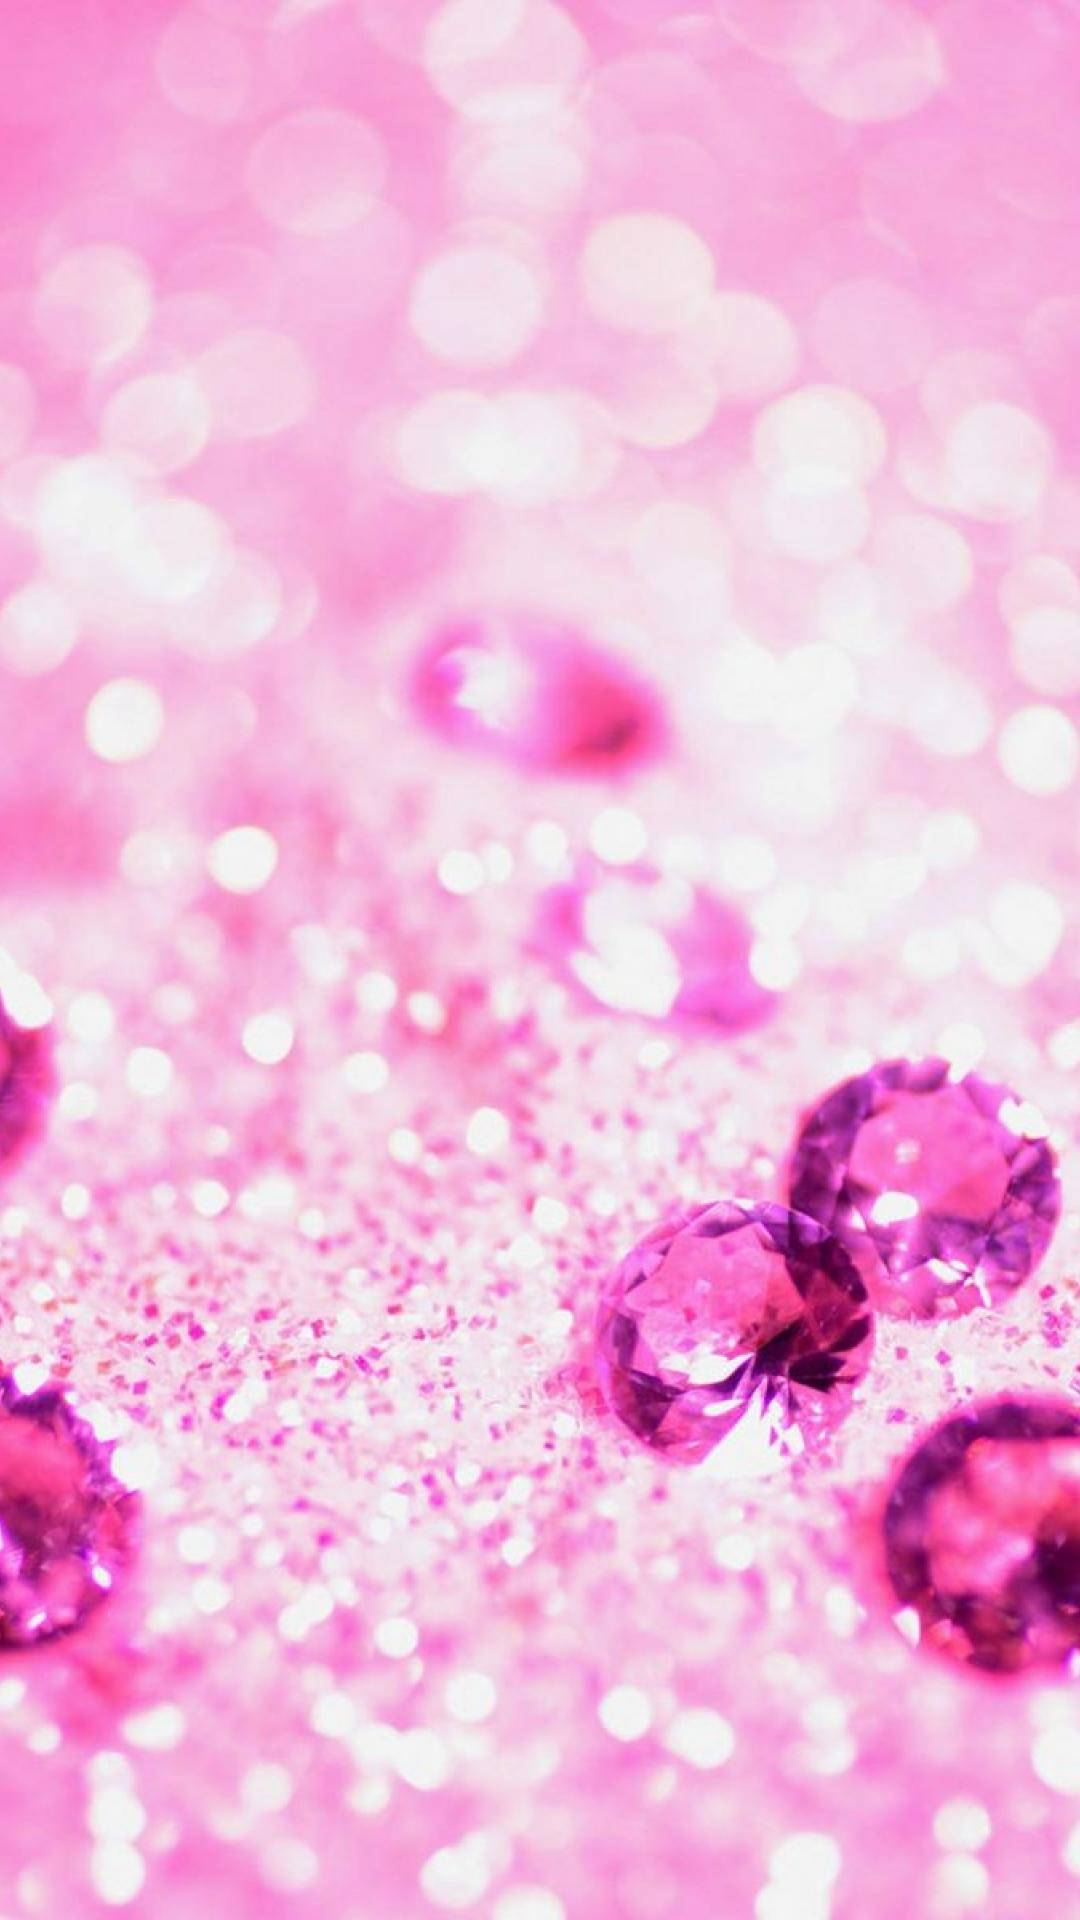 Aesthetic Girly Pink Diamonds Background